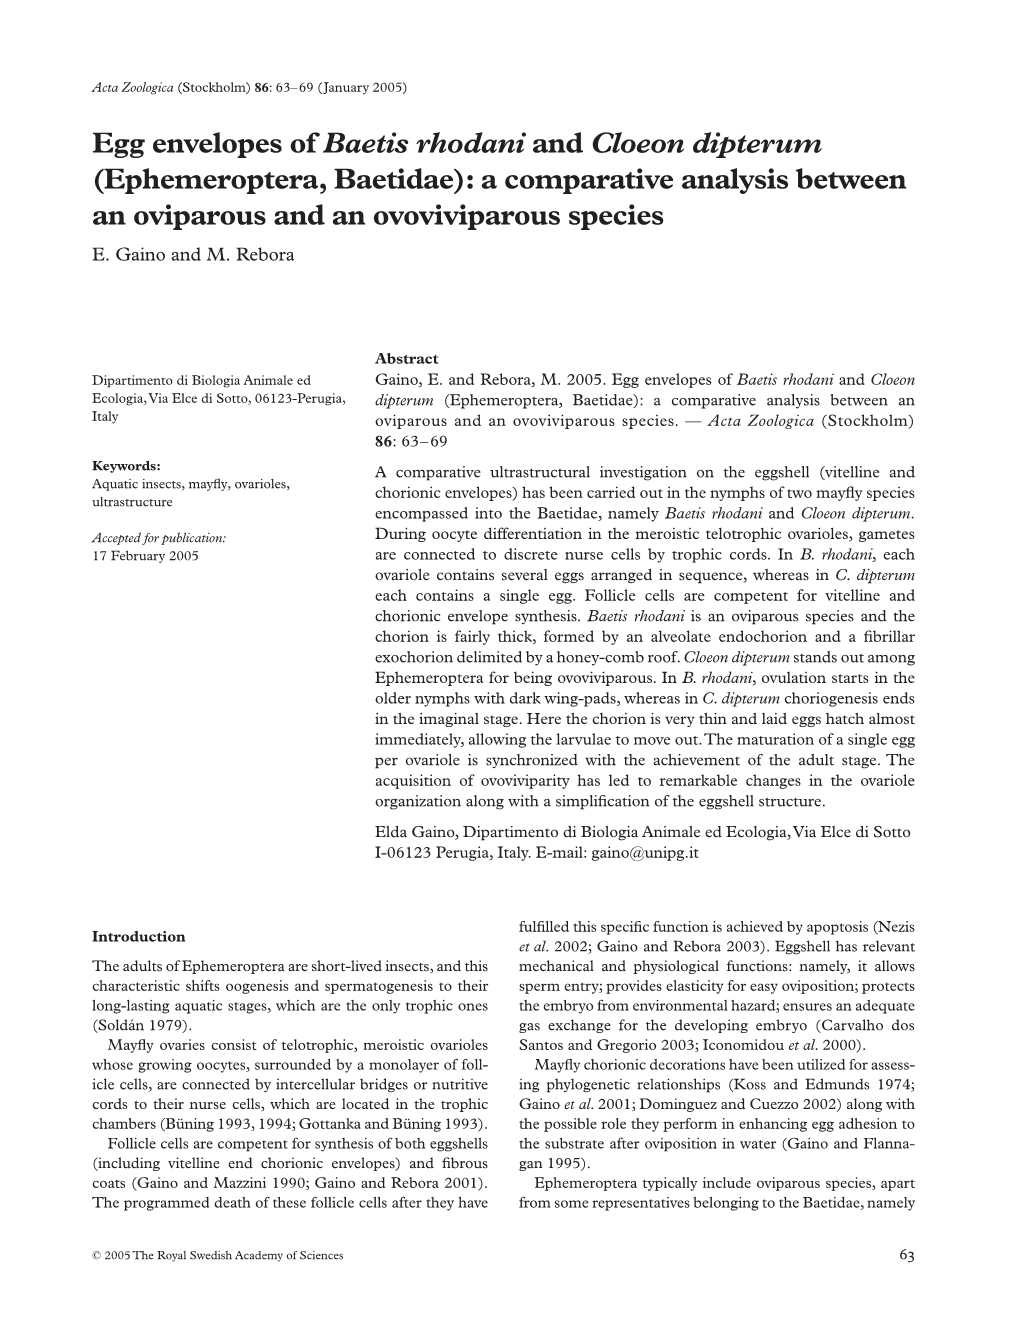 Egg Envelopes of Baetis Rhodani and Cloeon Dipterum (Ephemeroptera, Baetidae): a Comparative Analysis Between an Oviparous and A